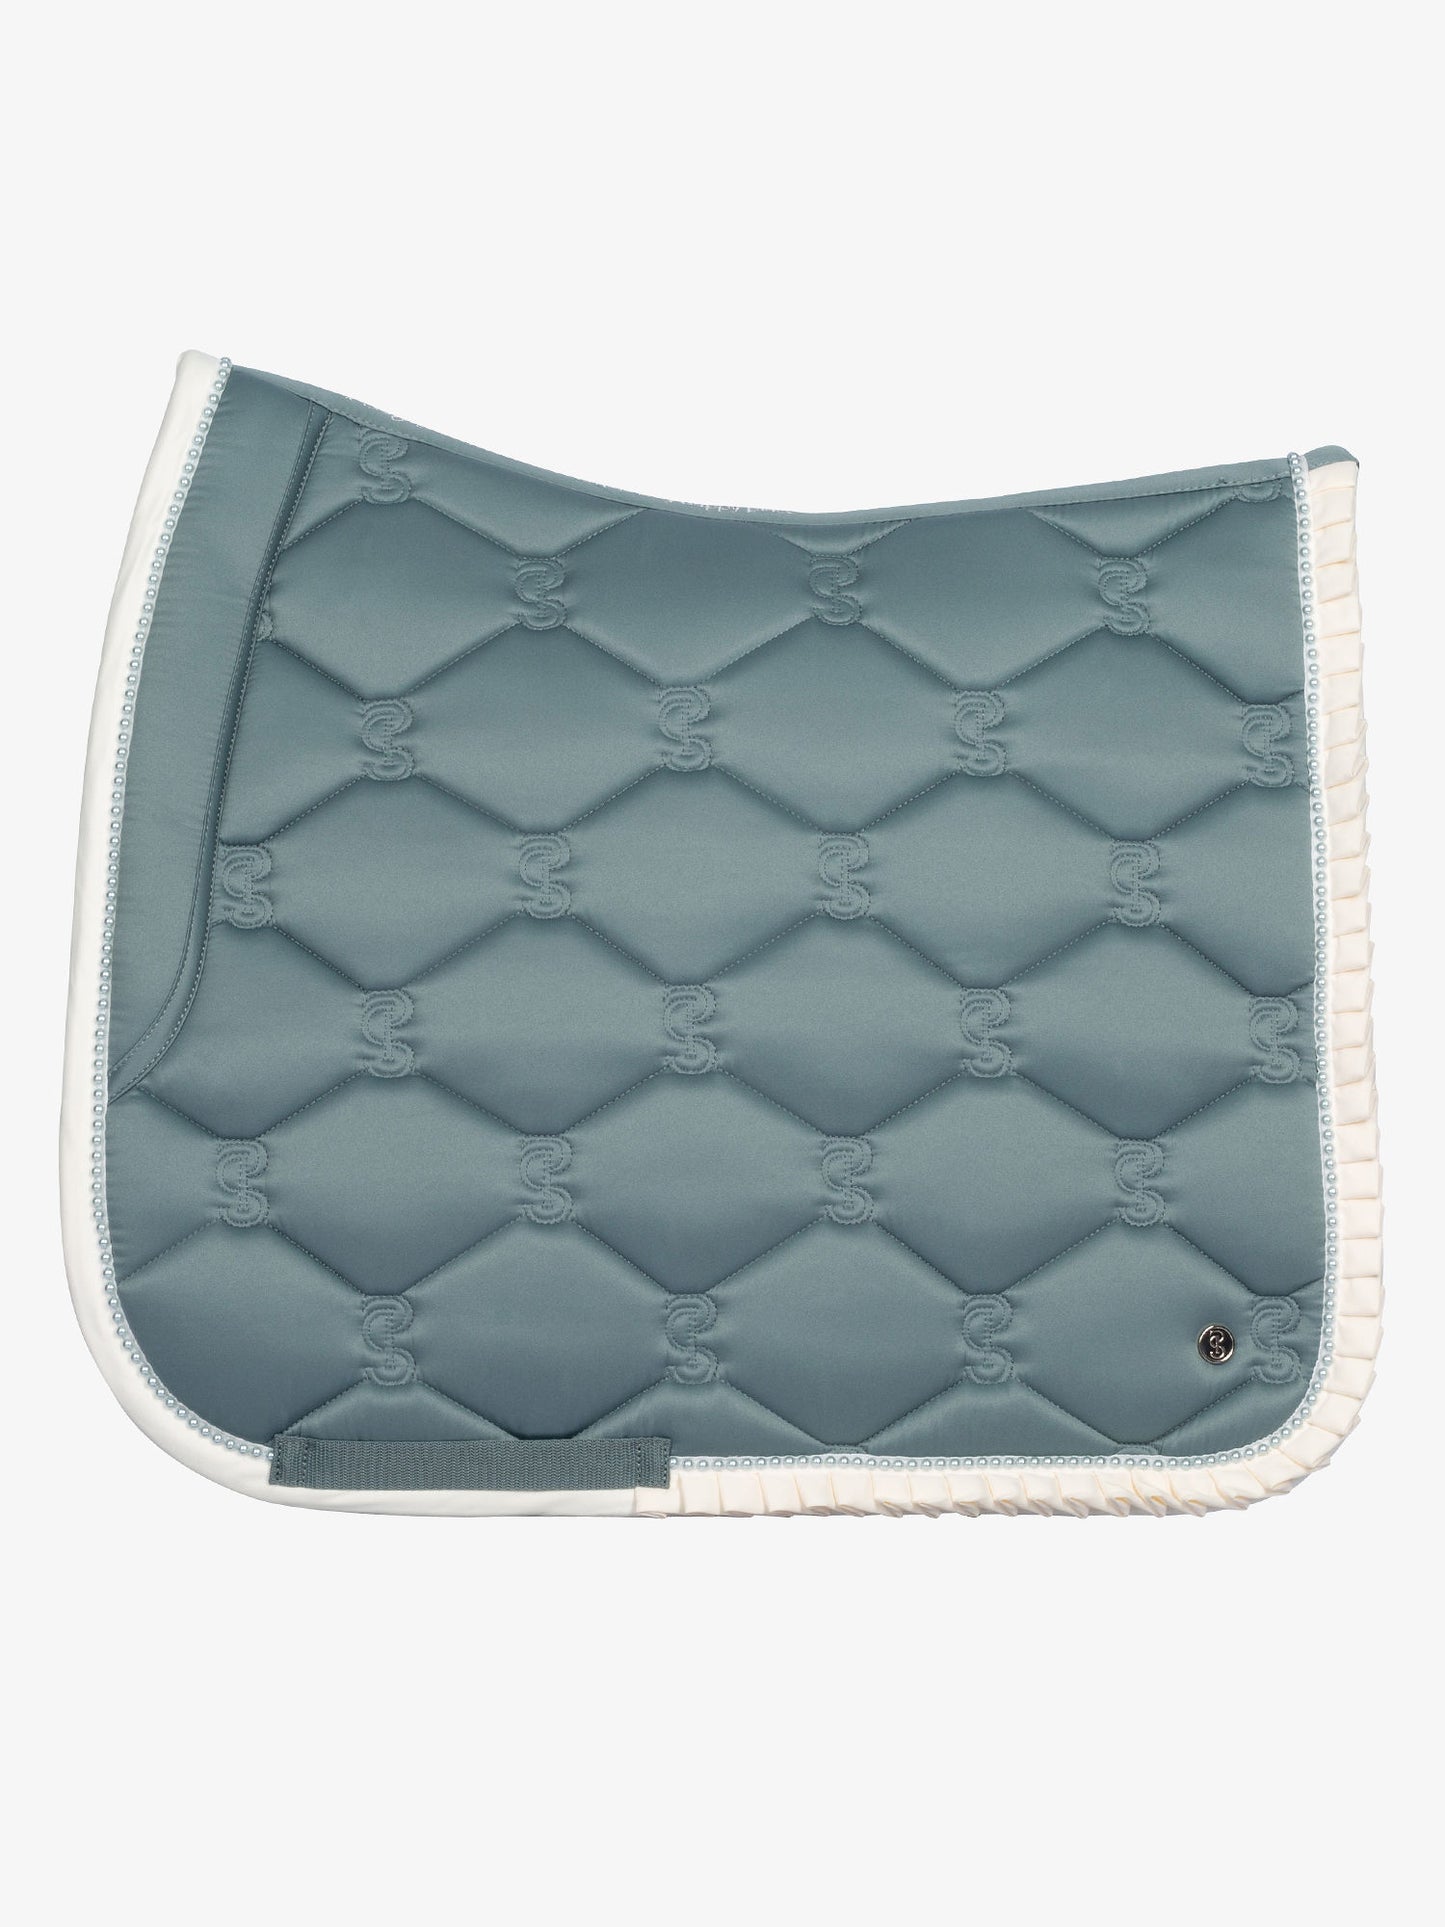 PS of Sweden -  Limited Edition Pearl Ruffle Dressage Saddlepad & Bandages Set - Storm Blue